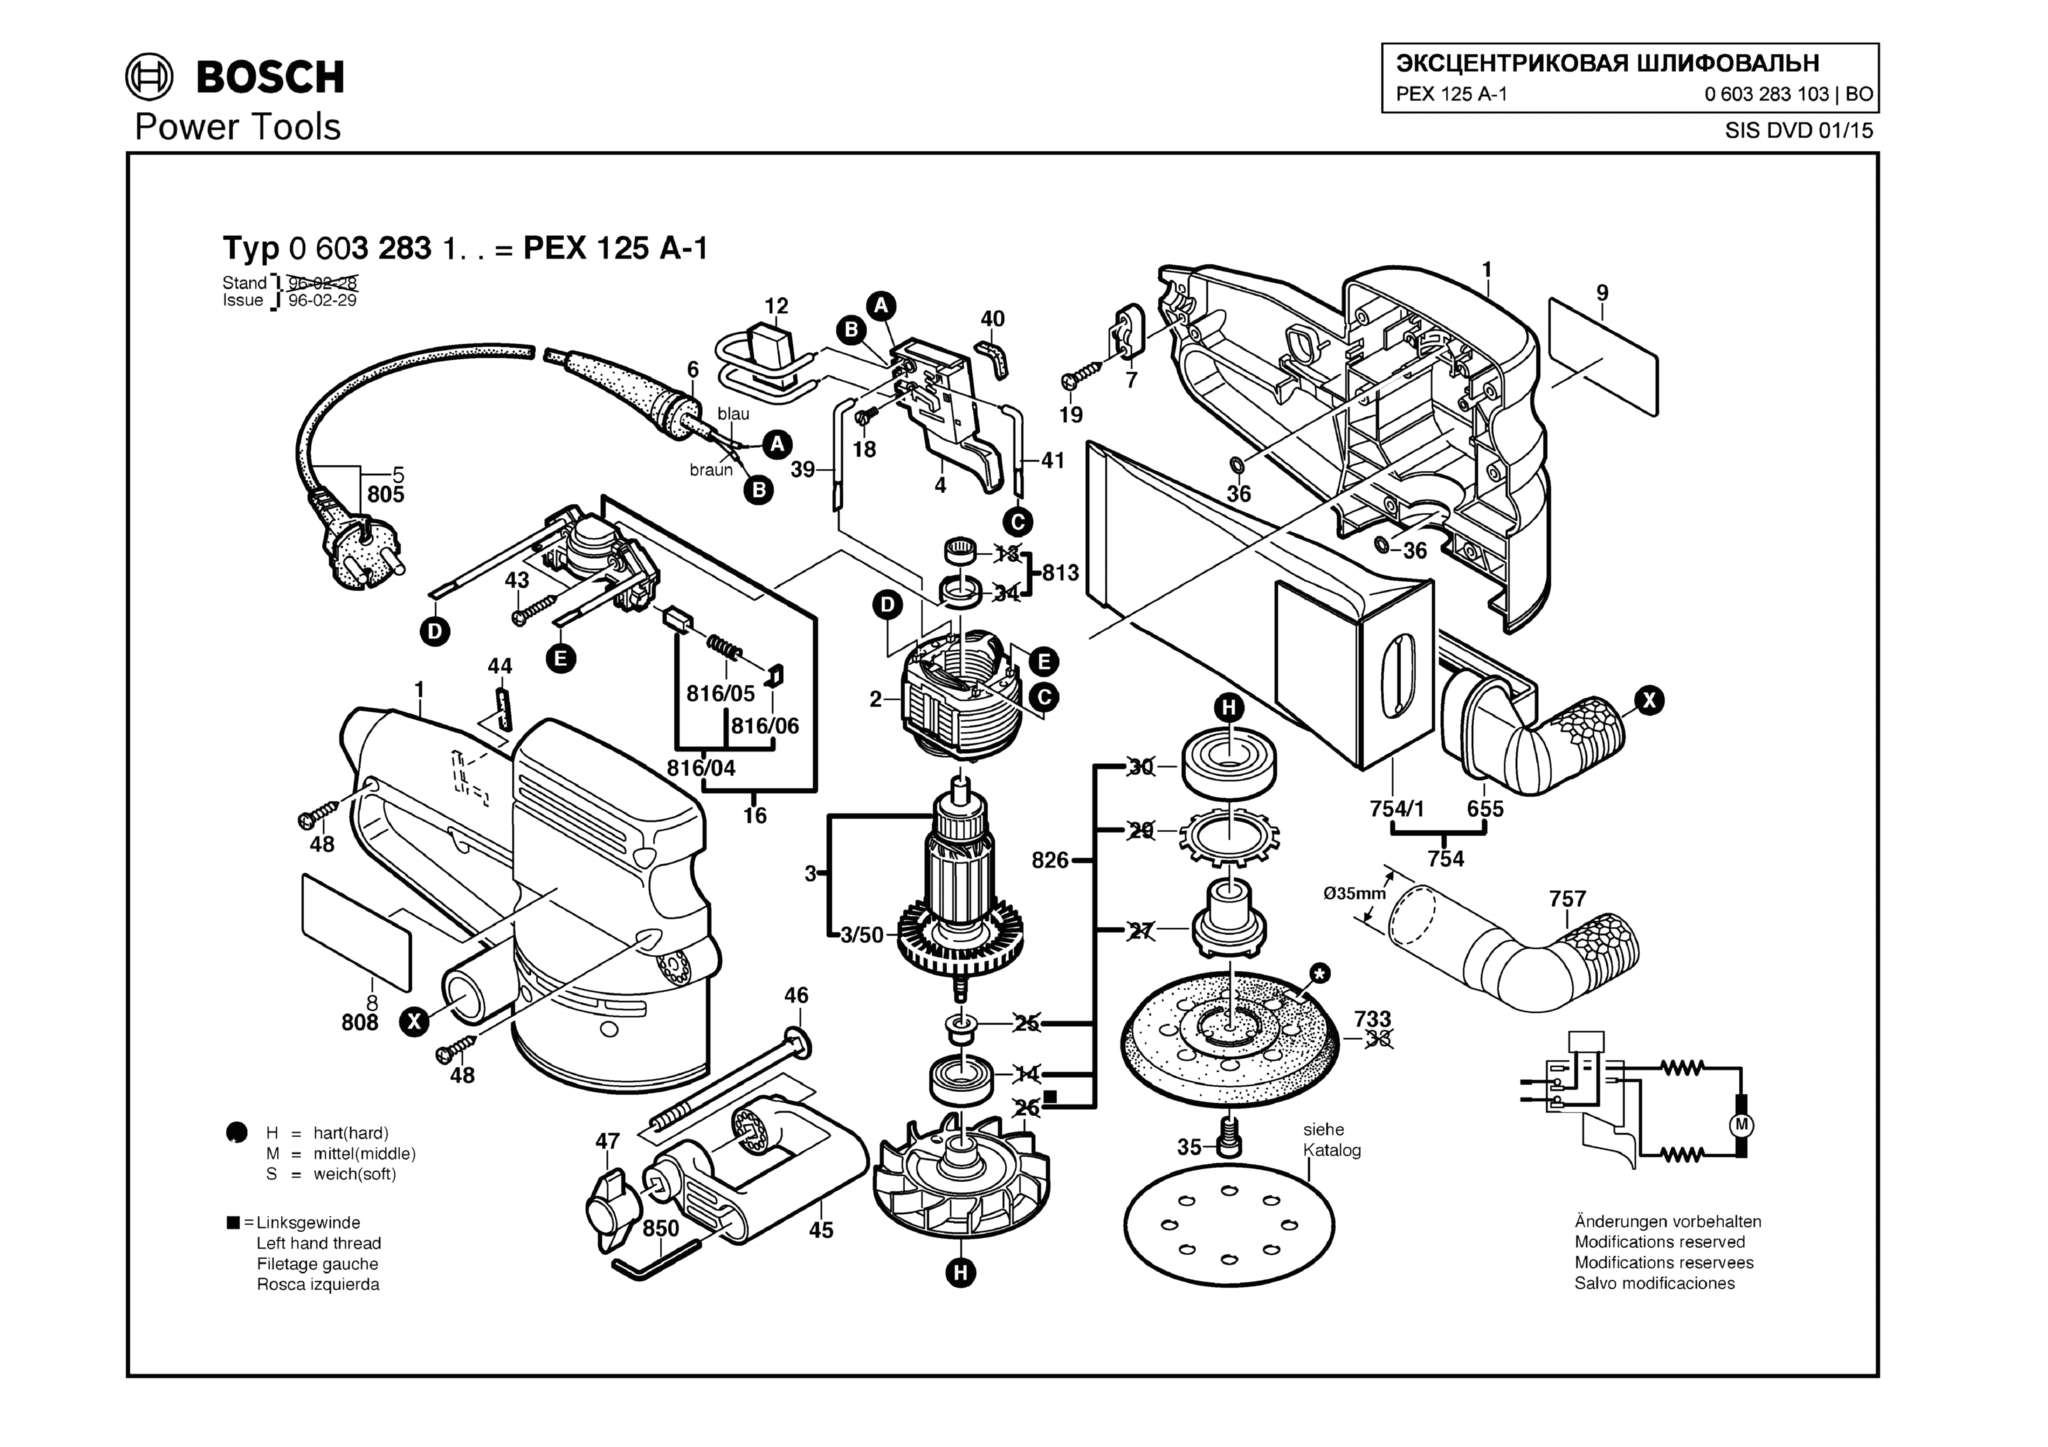 Запчасти, схема и деталировка Bosch PEX 125 A-1 (ТИП 0603283103)